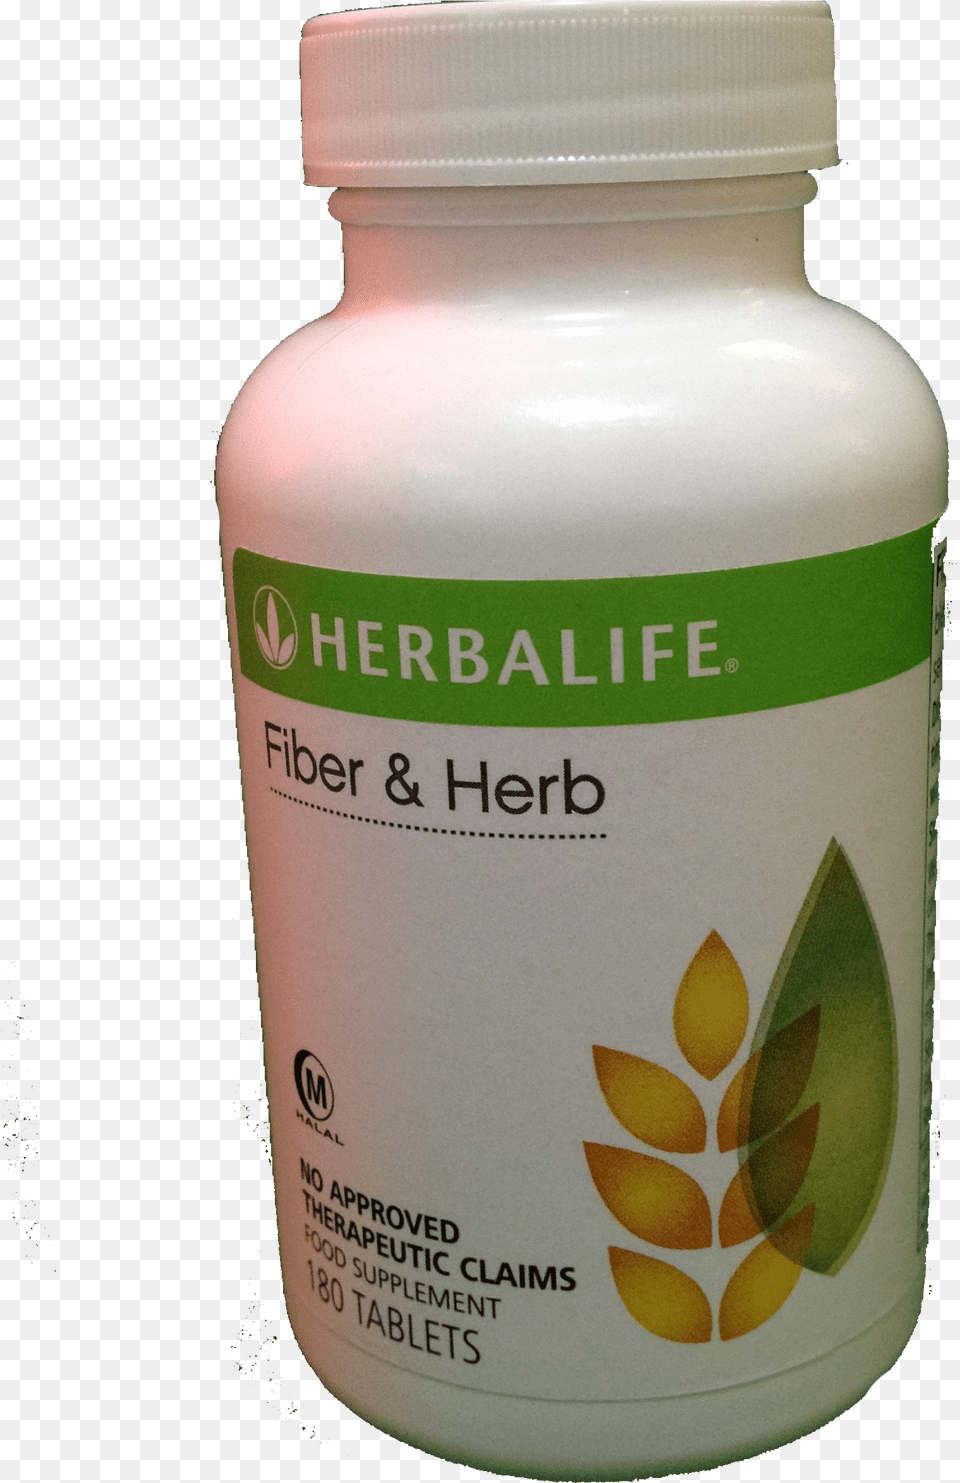 Herbalife Fiber And Herb Supplement Herbalife, Herbal, Herbs, Plant, Astragalus Png Image